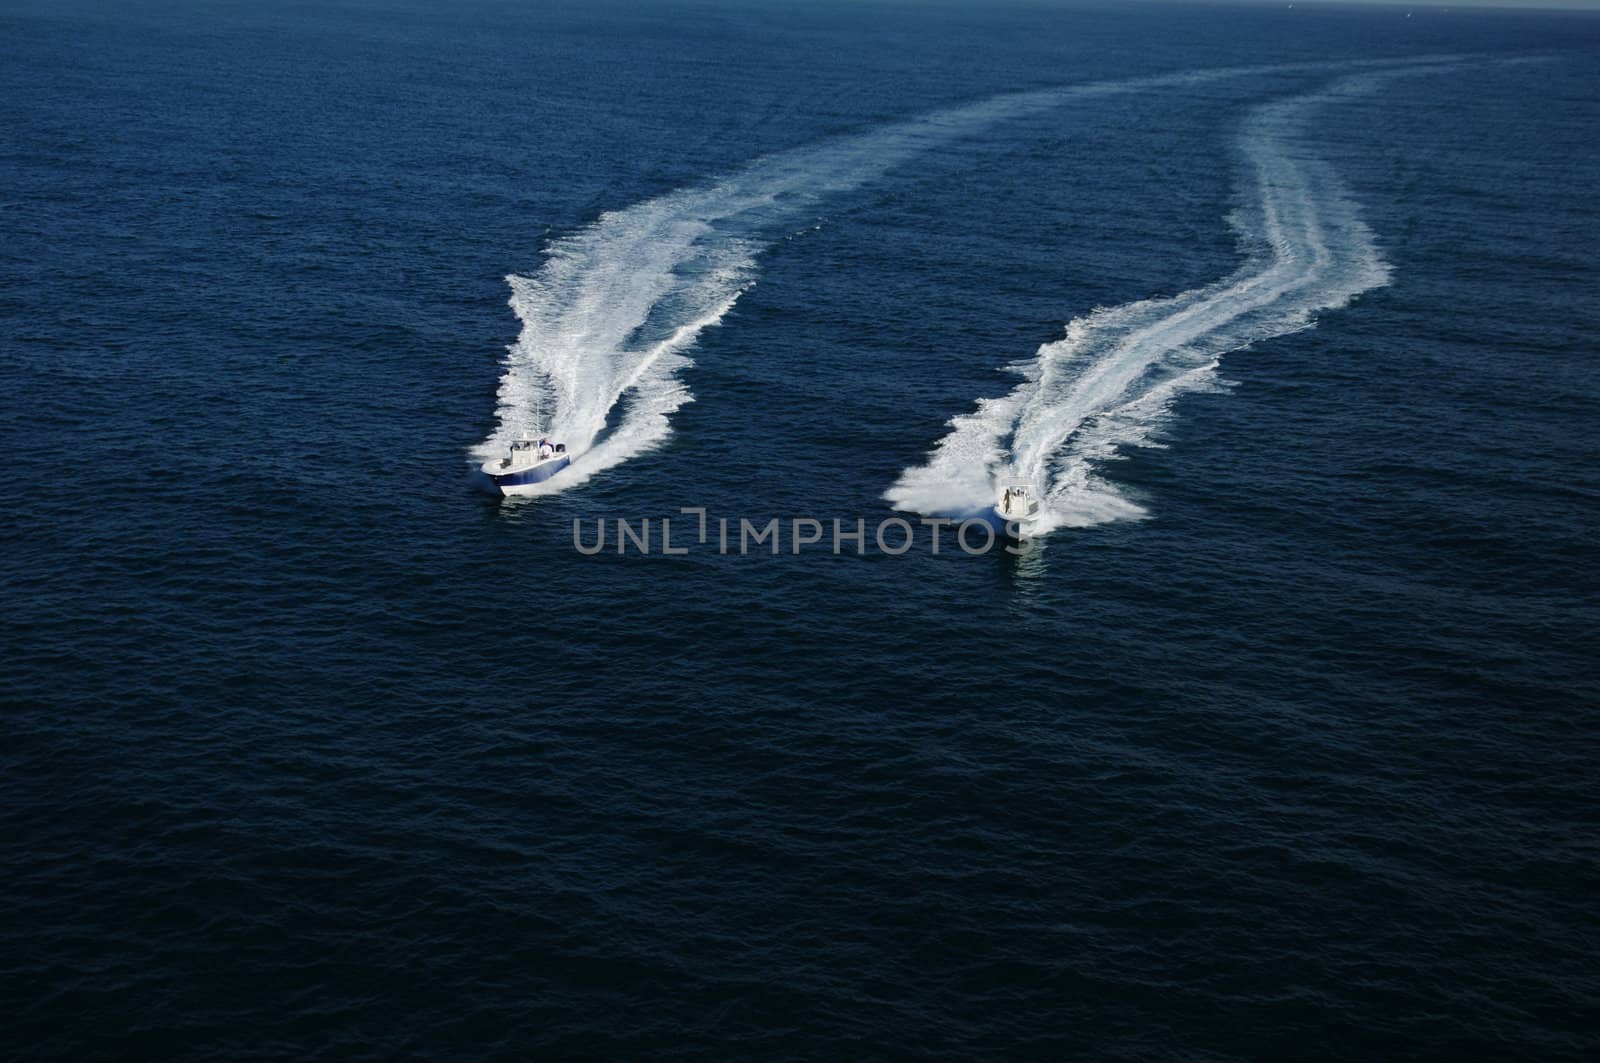 Two boats racing in ocean by ftlaudgirl